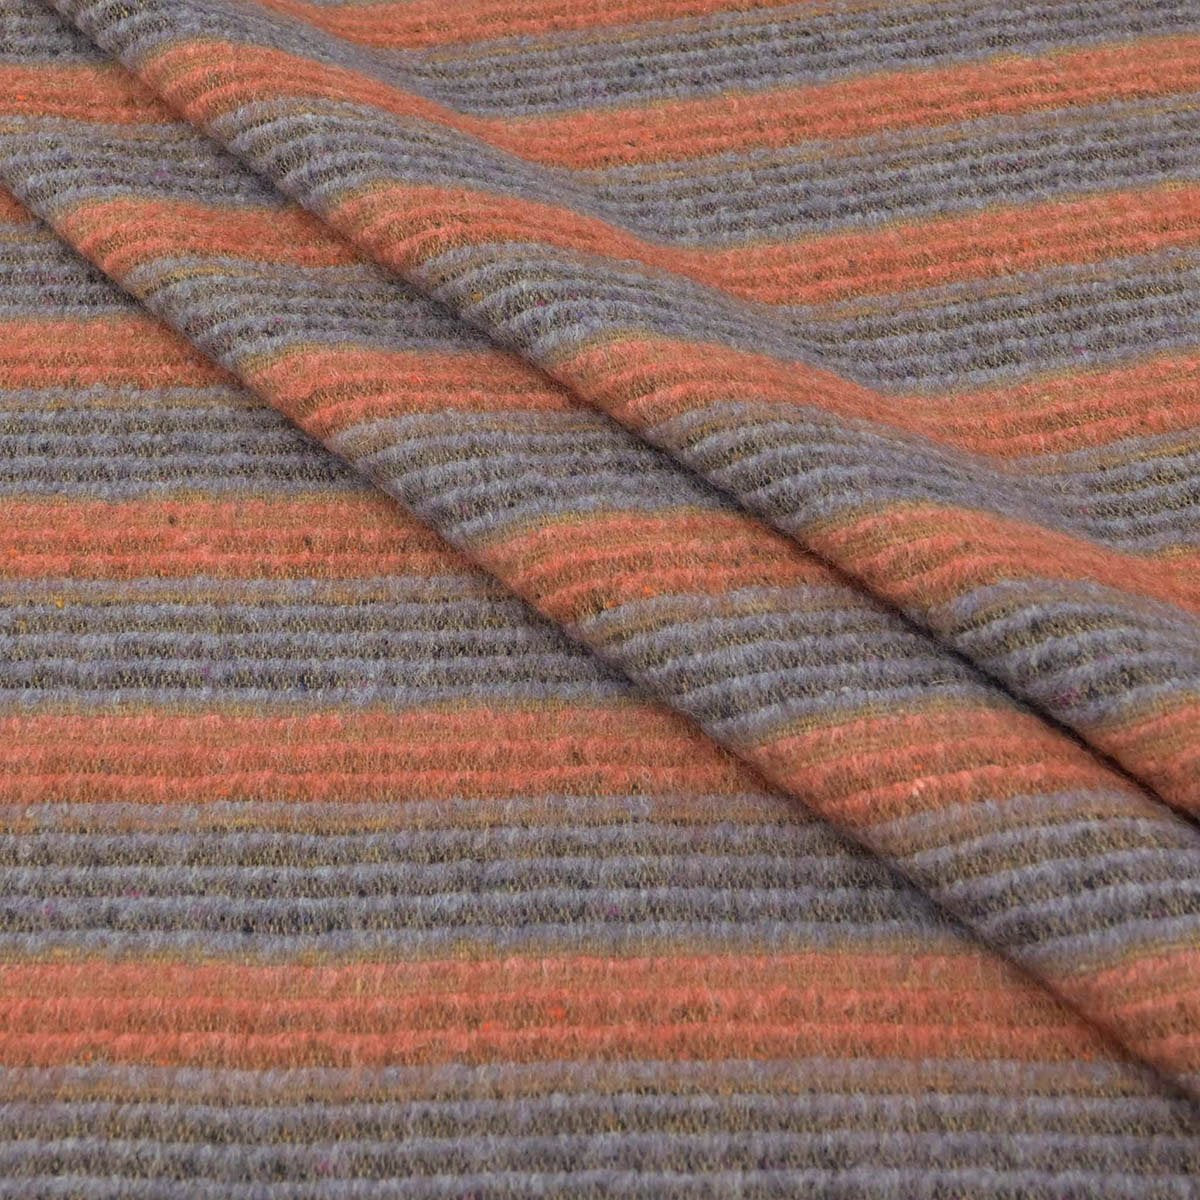 Salmon and Purple Coating Fabric 97209